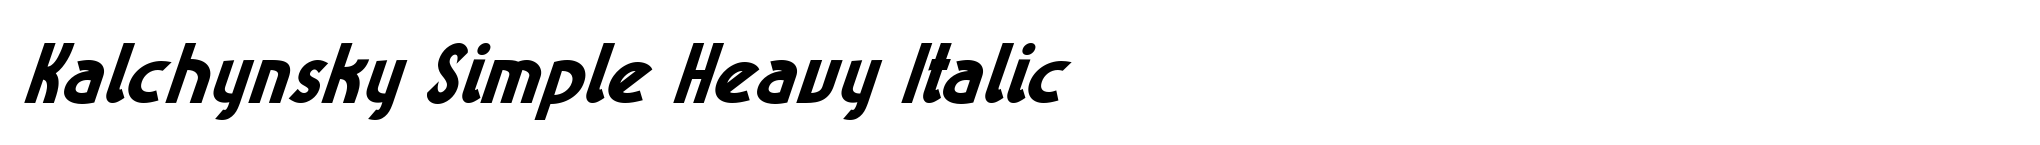 Kalchynsky Simple Heavy Italic image